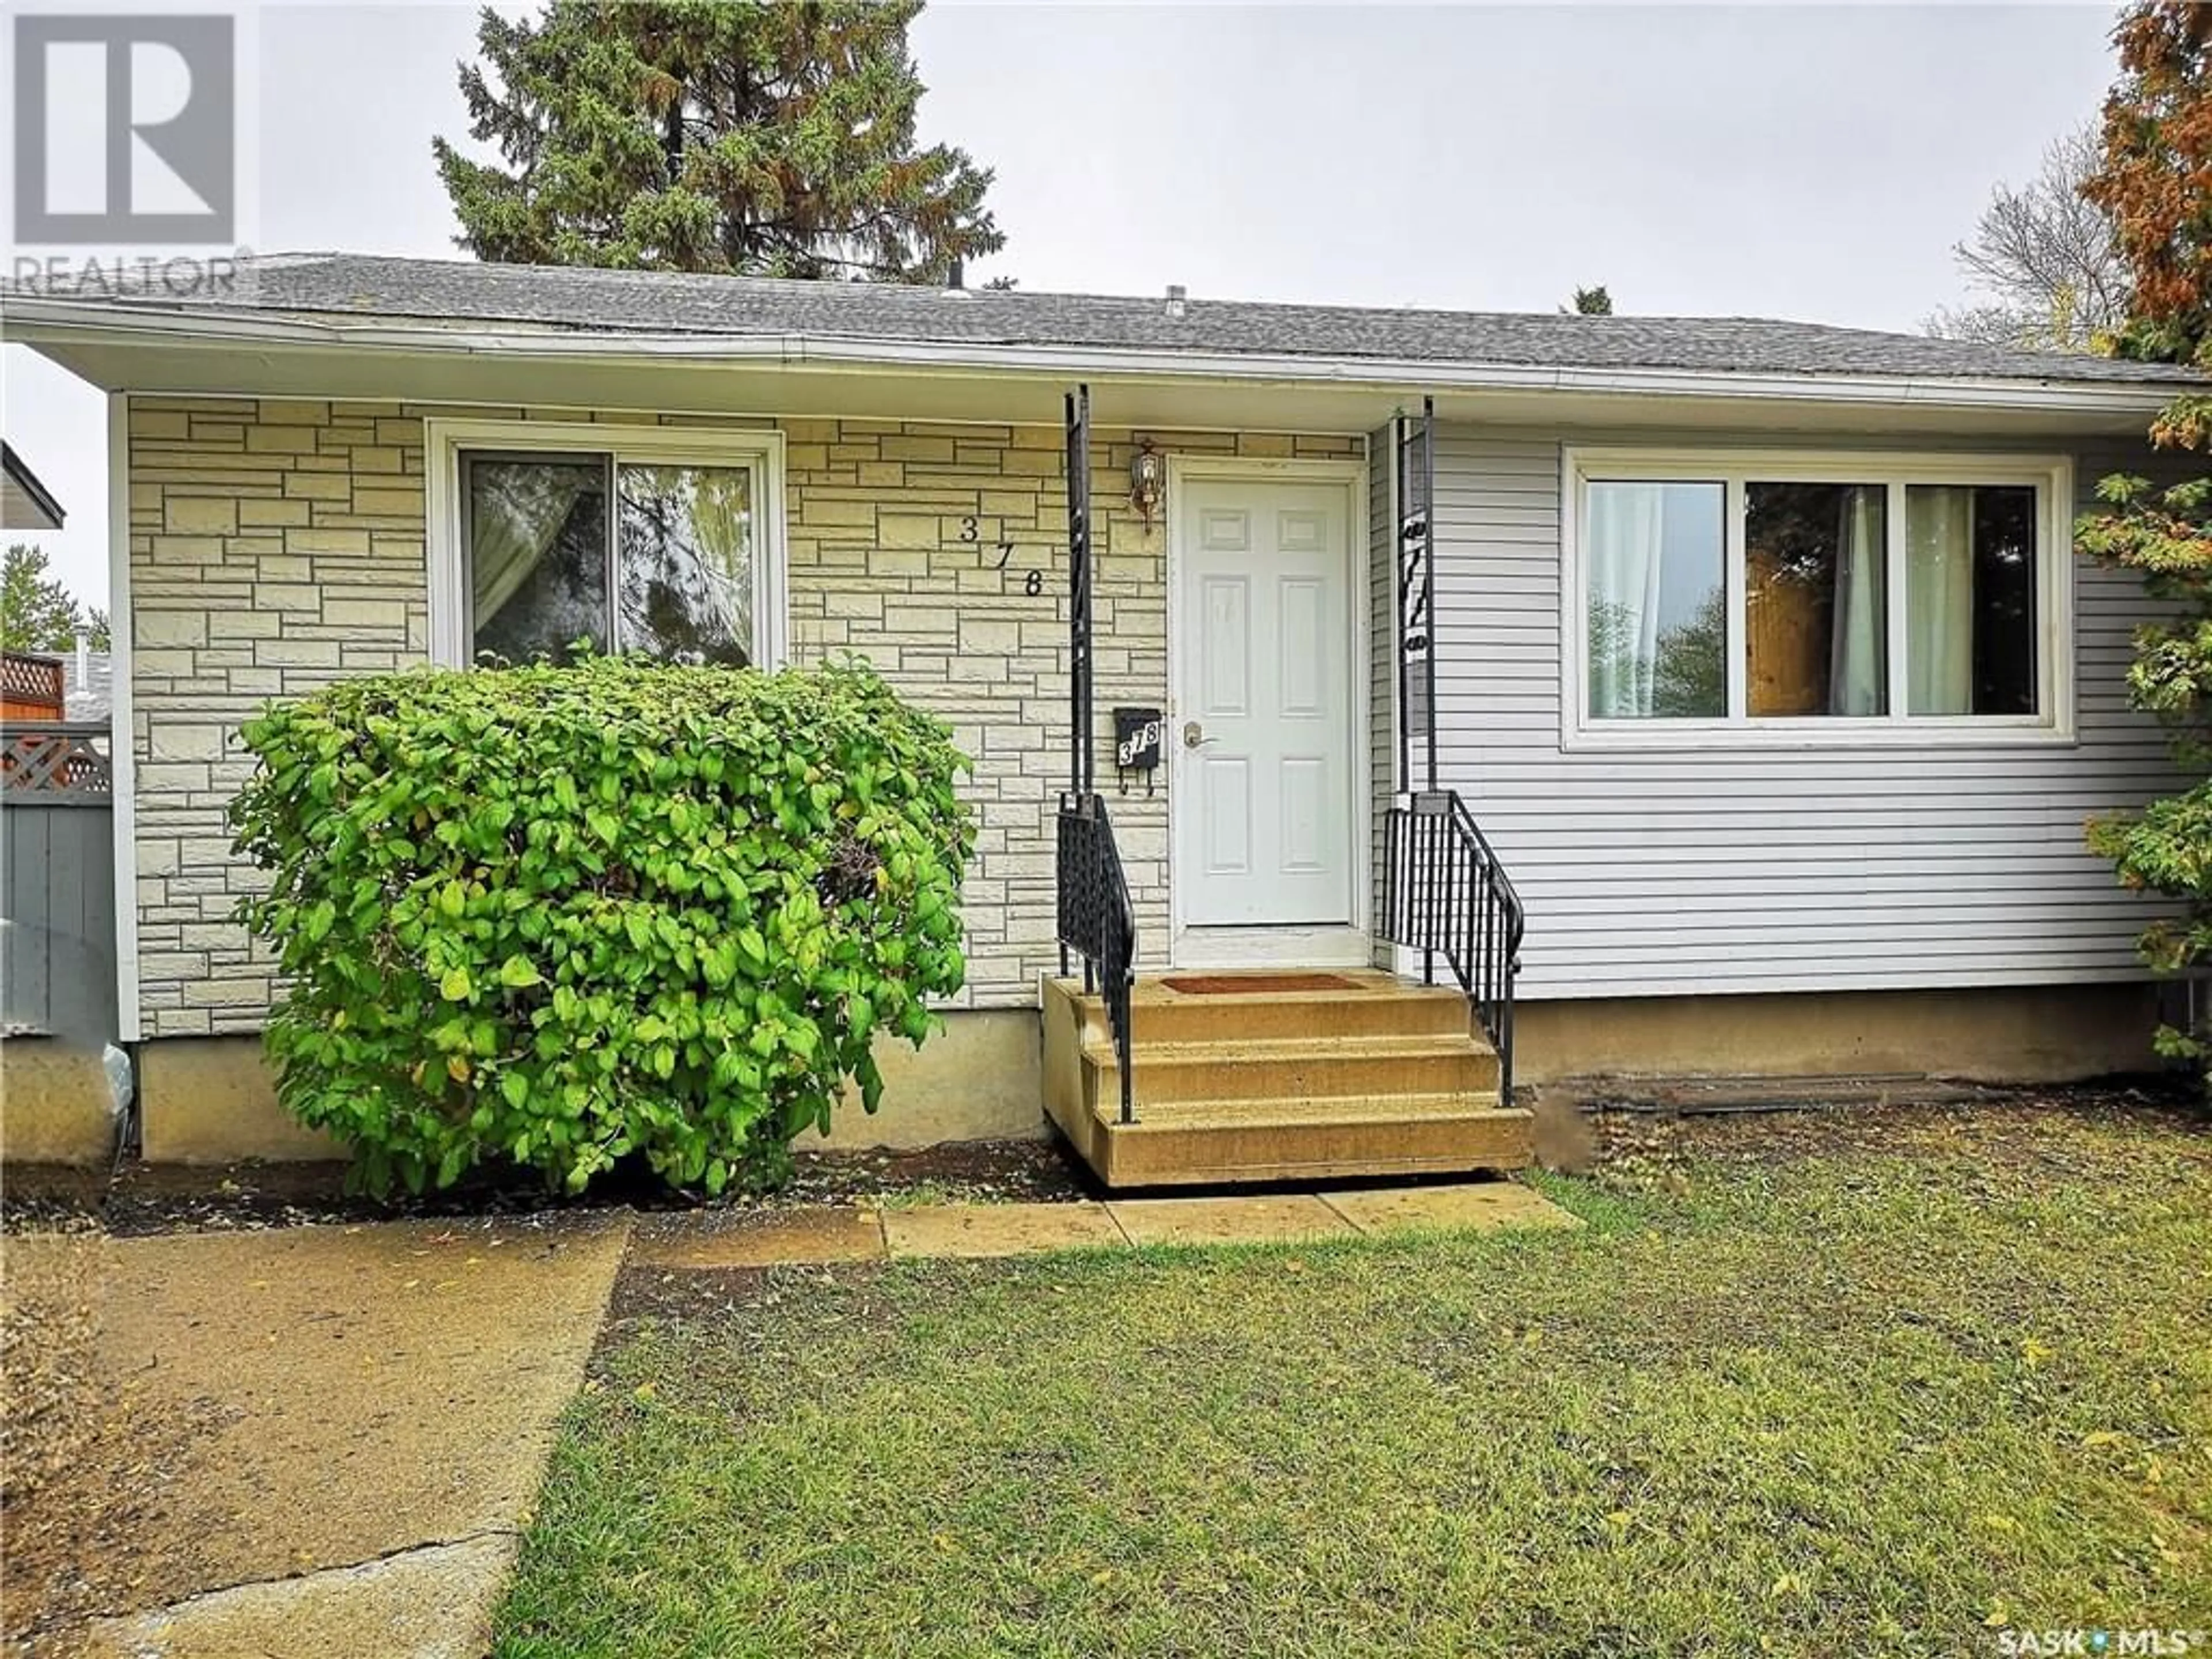 Home with vinyl exterior material for 378 Lloyd CRESCENT, Saskatoon Saskatchewan S7L4Z3